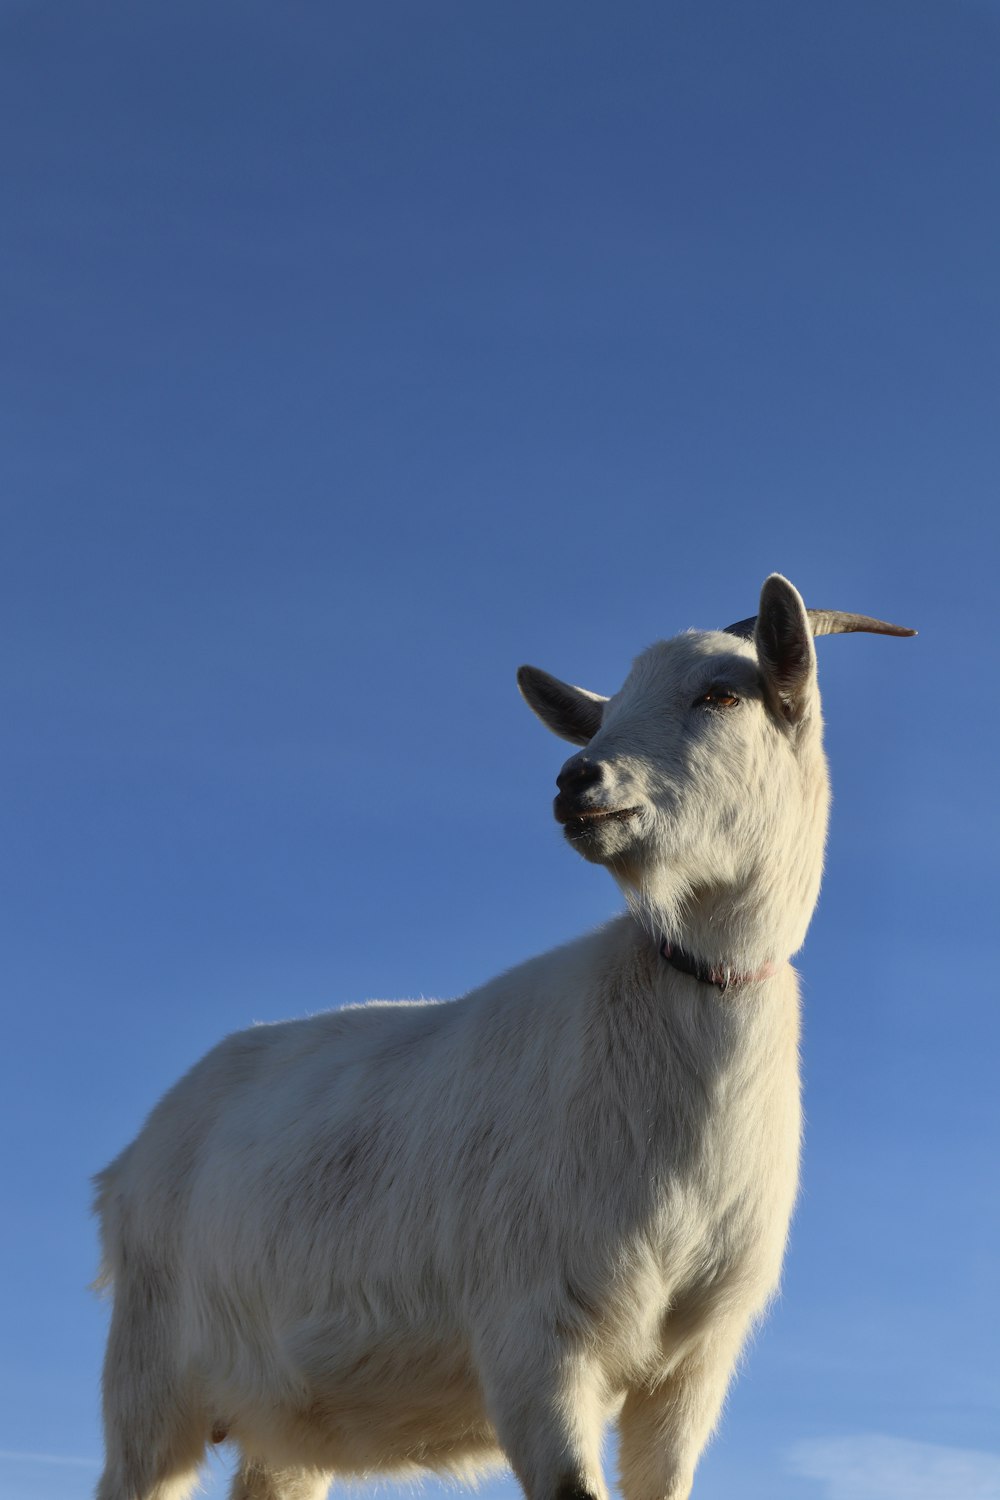 una capra bianca in piedi sulla cima di una collina